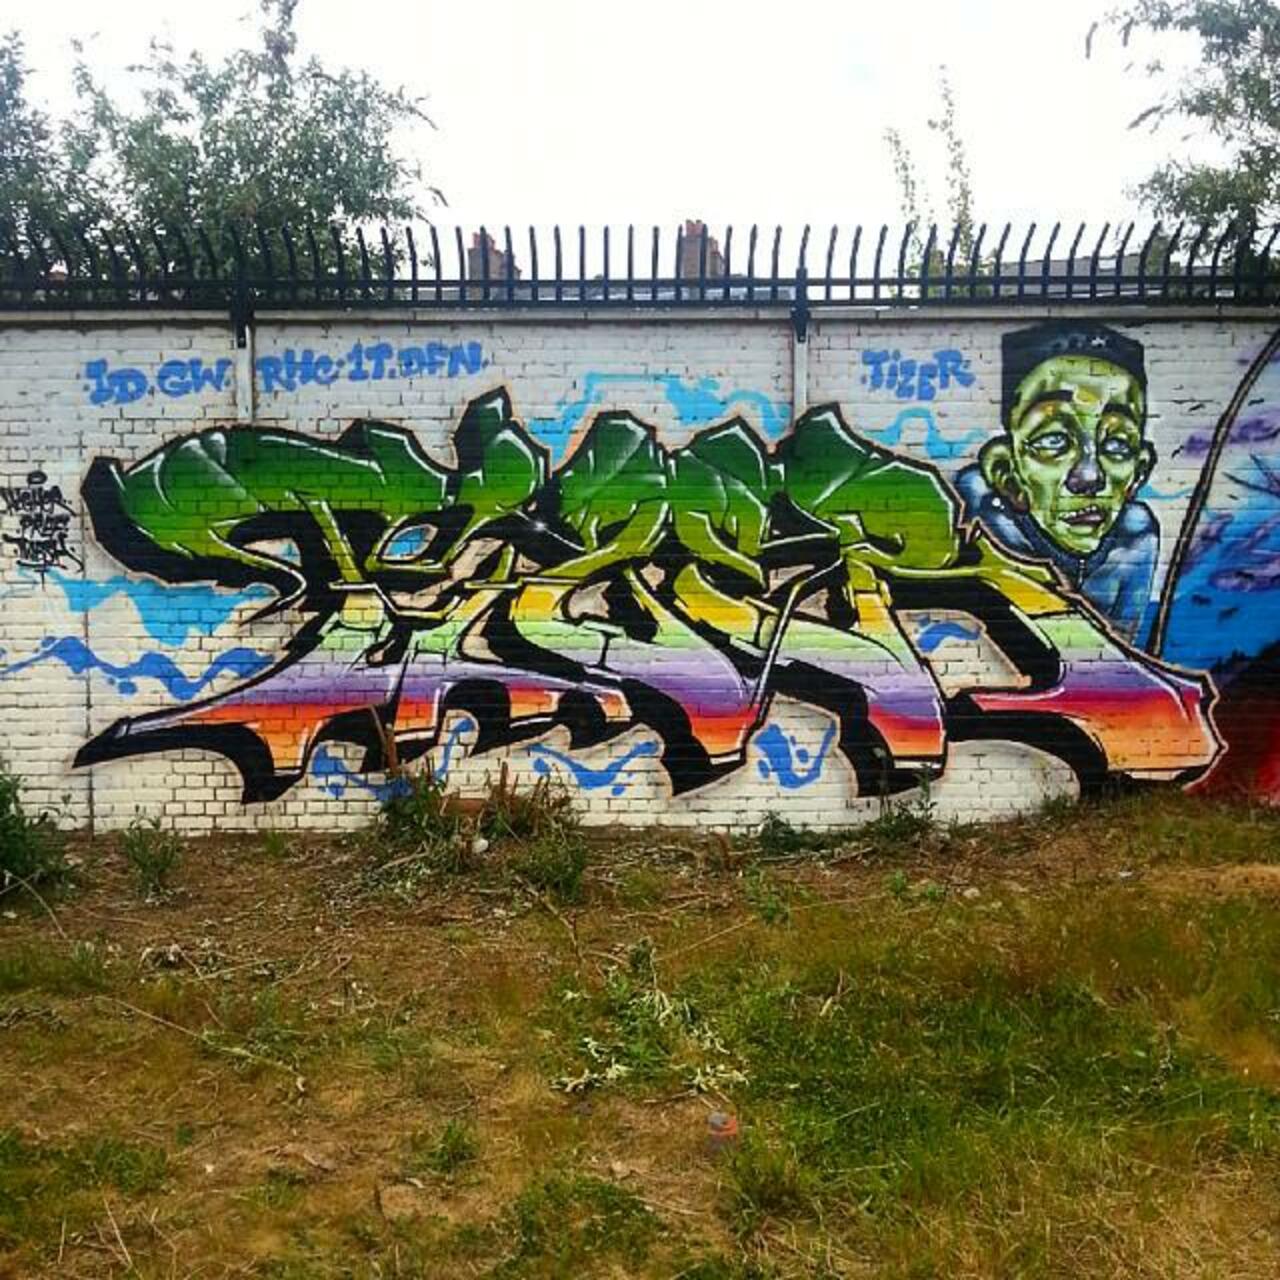 #Graffspotting #PhotoGraff Art by Tizer  #Graffiti #StreetArt #UrbanArt #TizerID #PedleyStreet #Shoreditch #London … http://t.co/2KP8tFdMHF